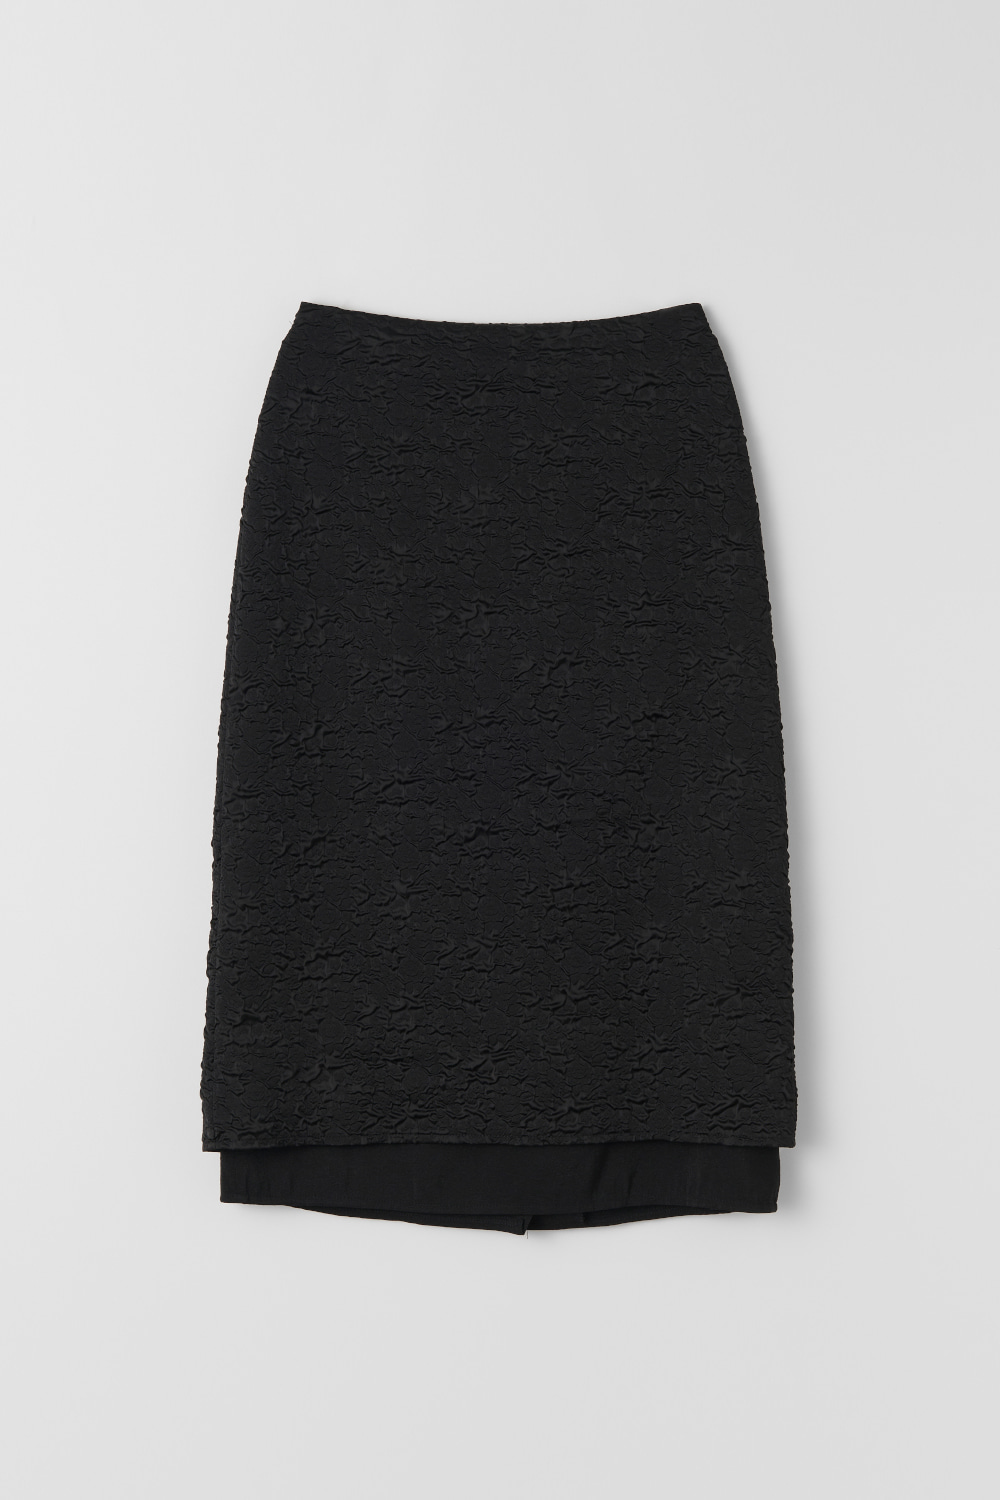 Jacquard Layer Skirt_Black